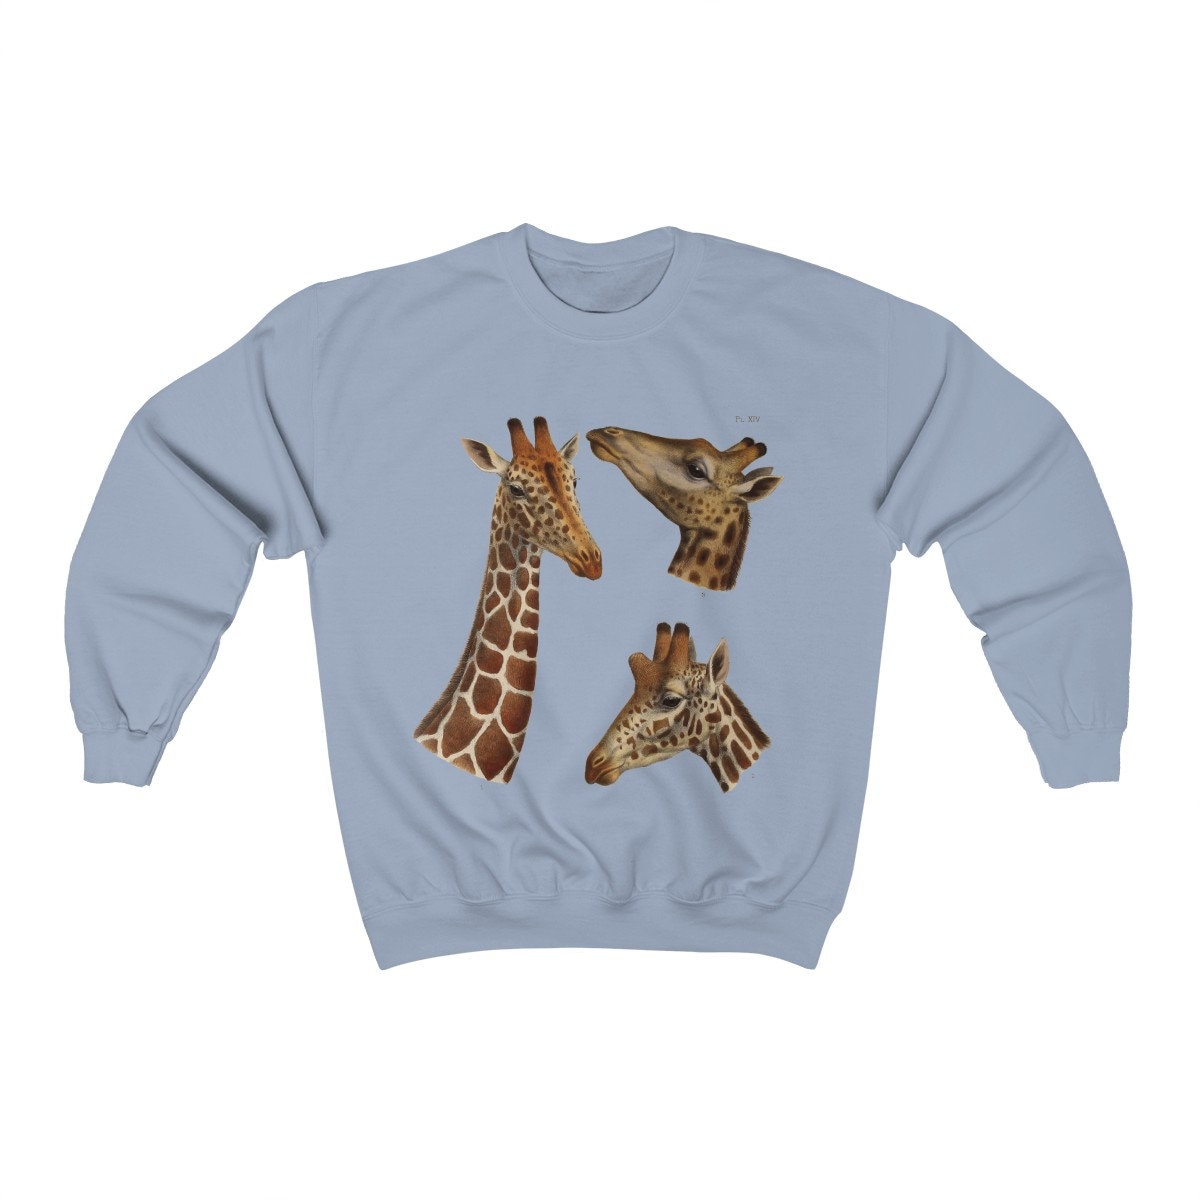 Giraffe Sweater Vintage Giraffe Print Crewneck Sweatshirt | Etsy